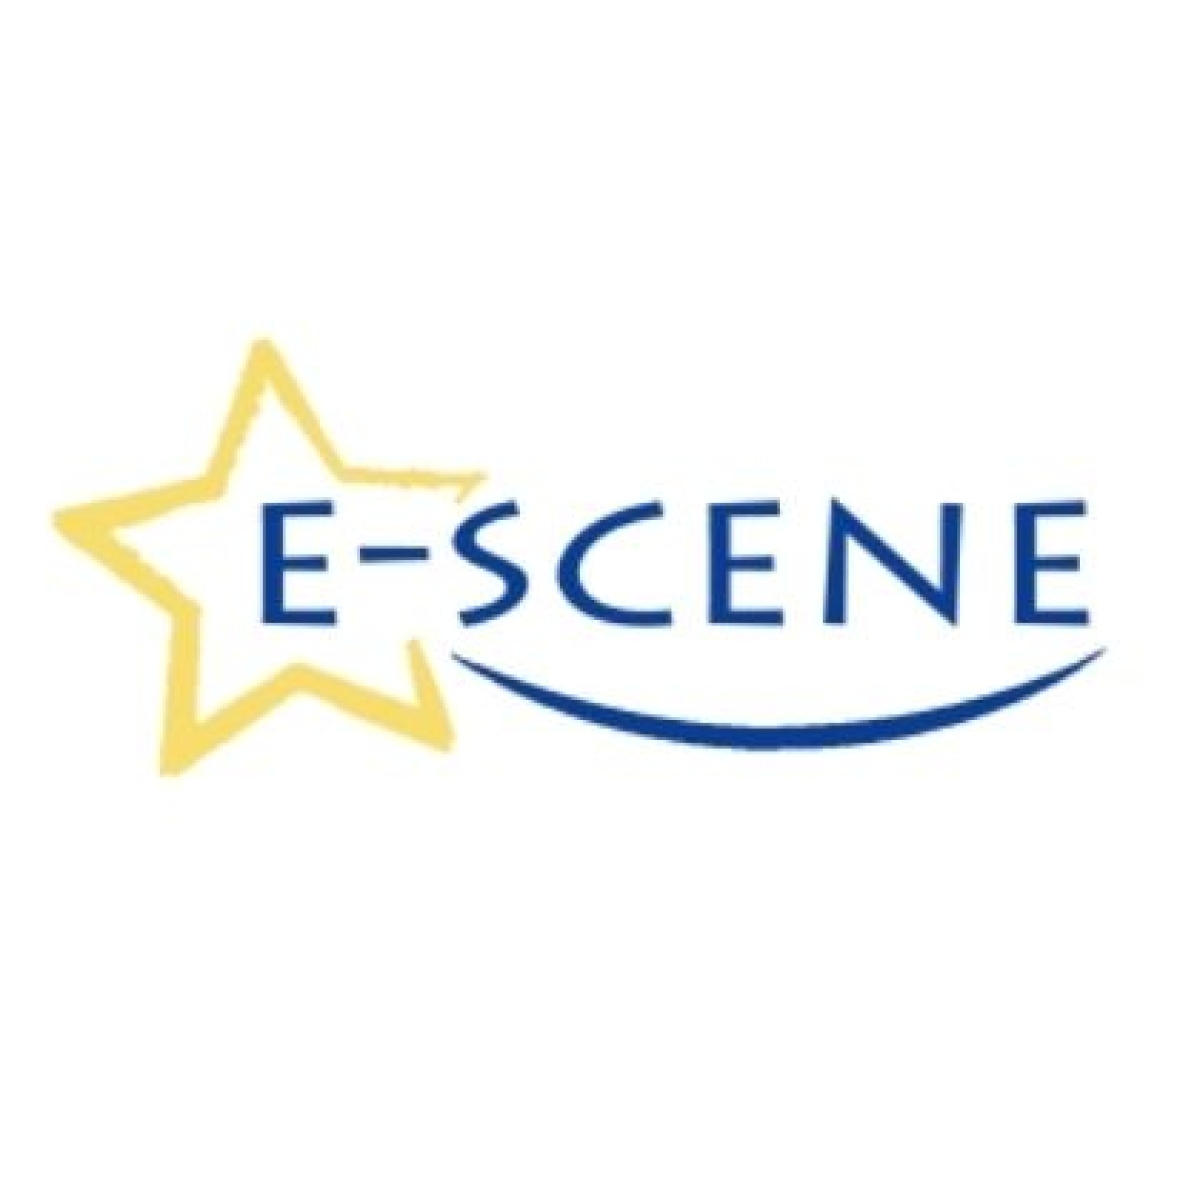 E scene logo image e scene logo